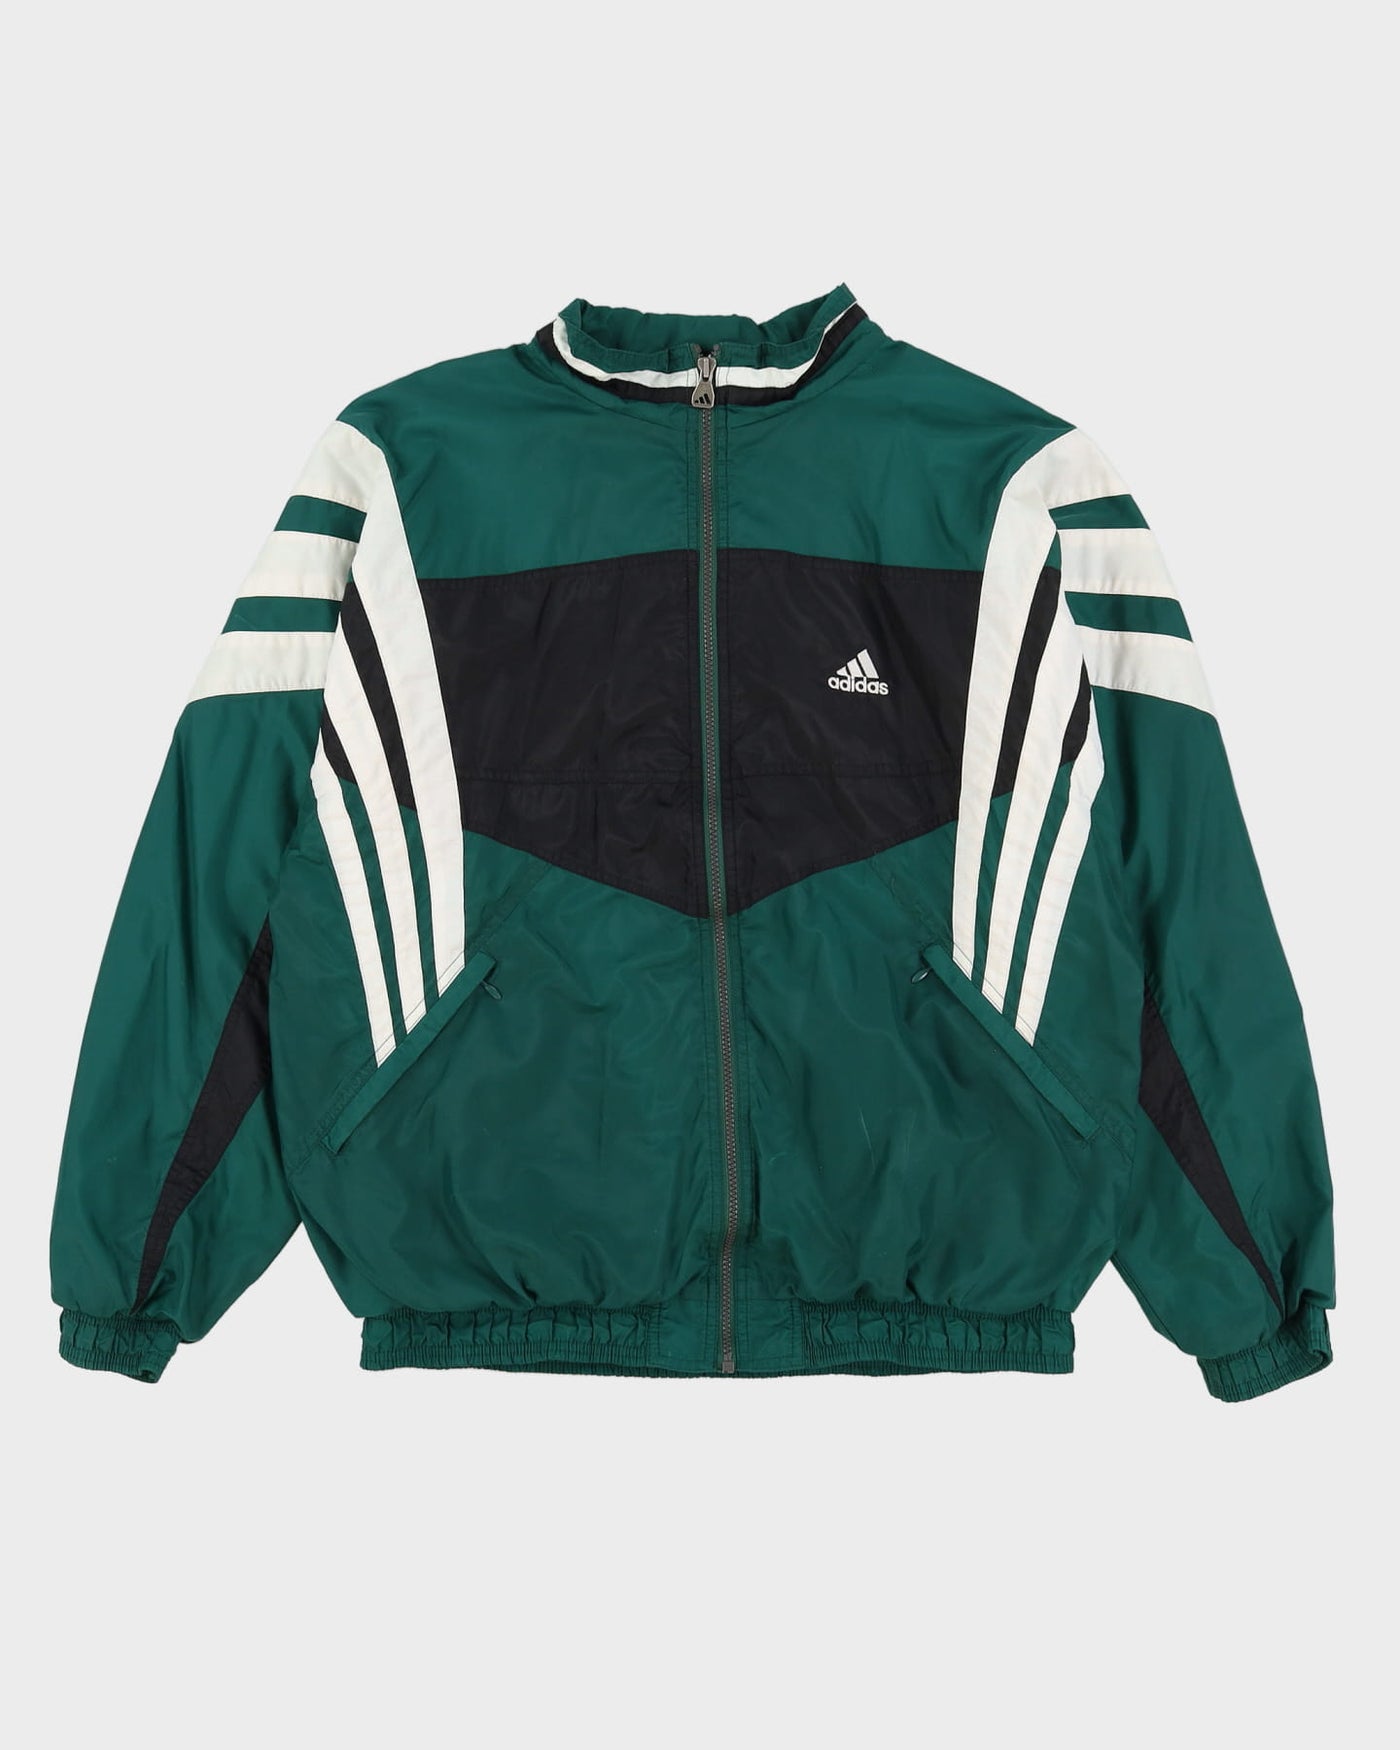 Vintage 90s Adidas Green / Black Windbreaker Shell Jacket - L